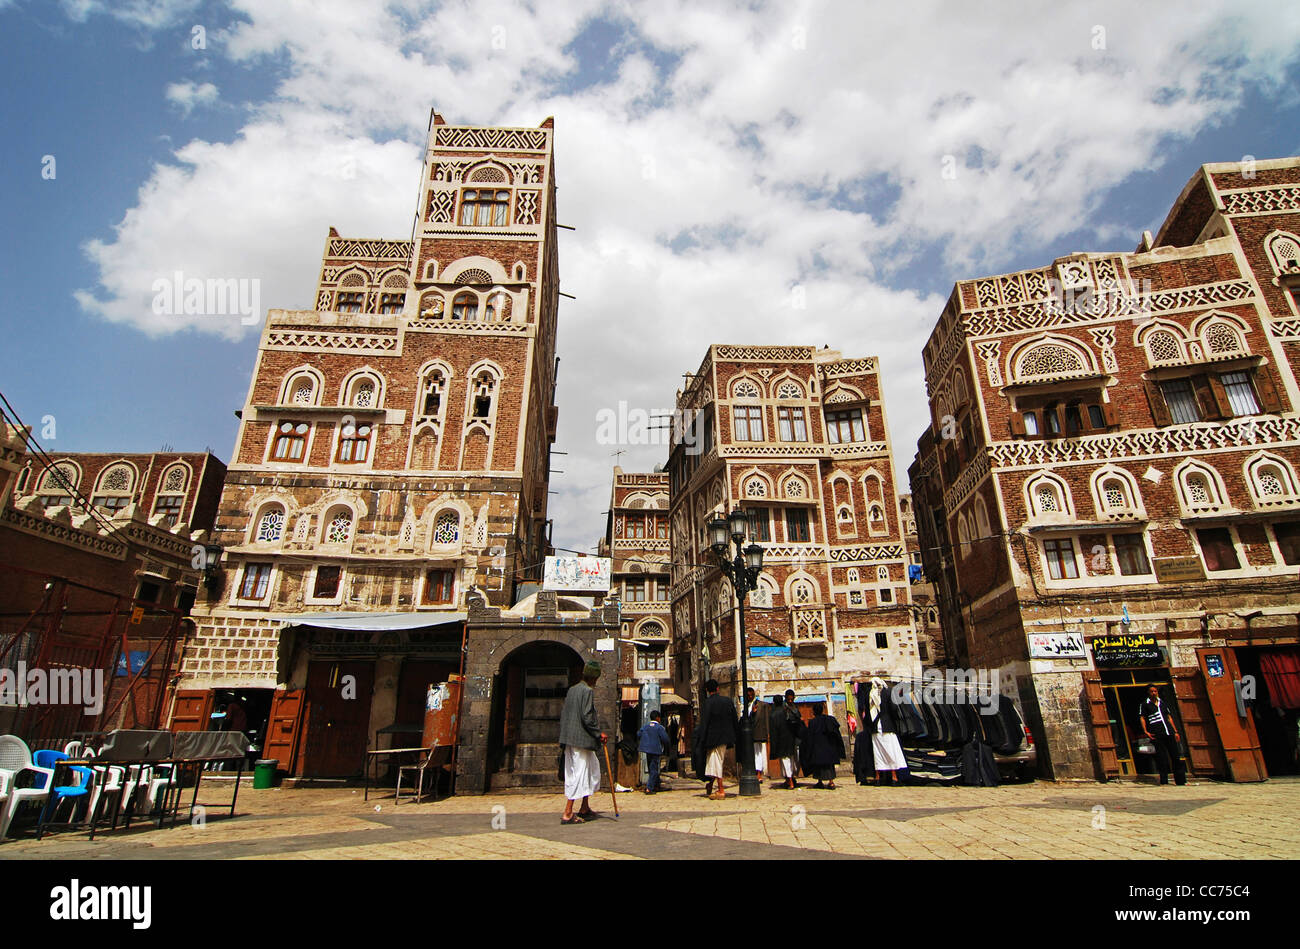 Pono filme in Sanaa